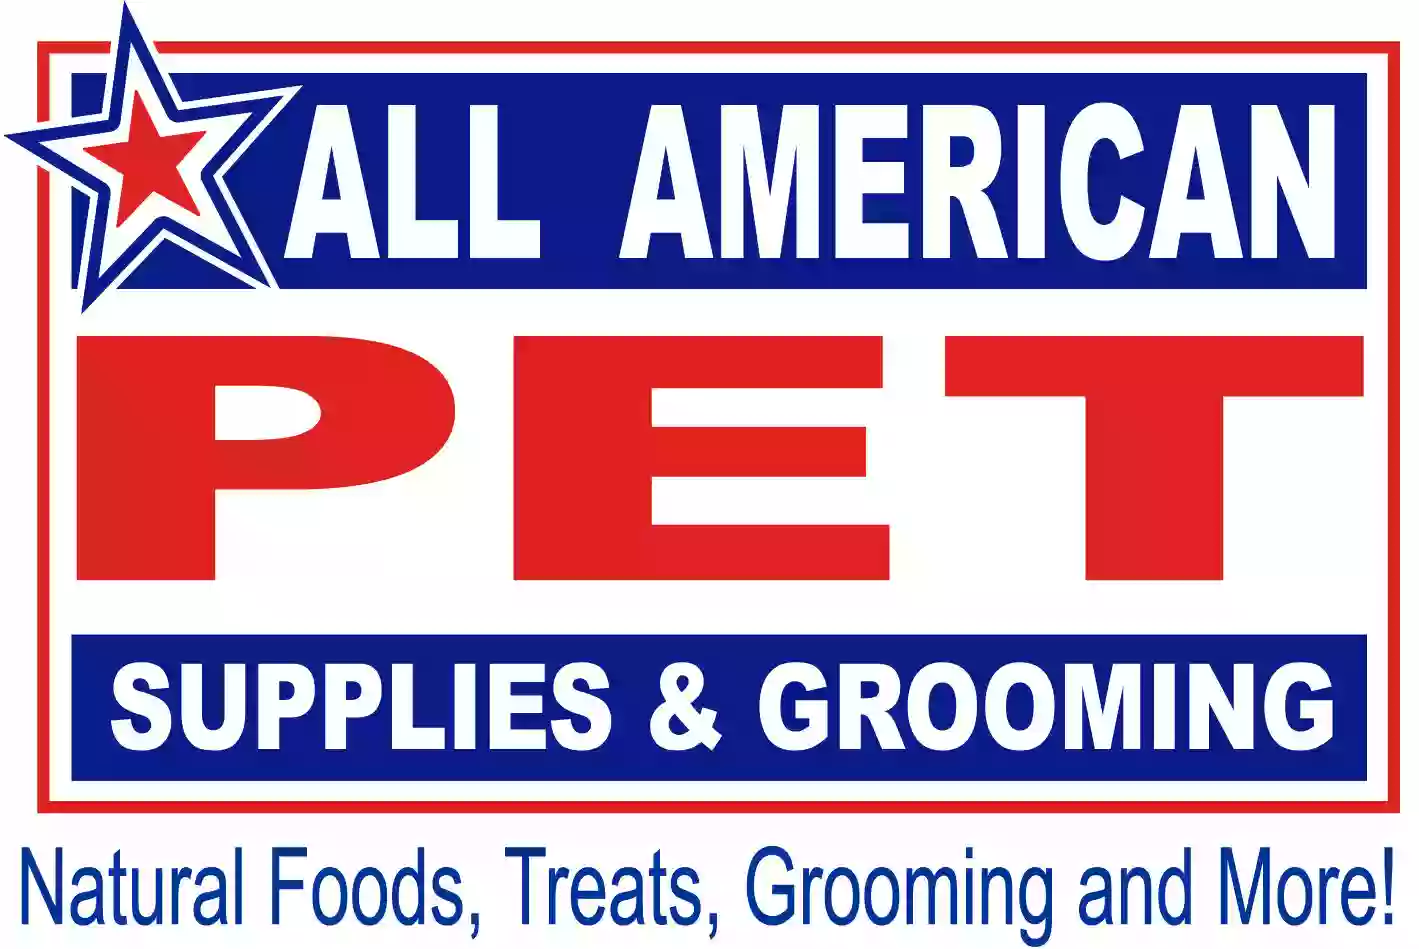 All American Pet